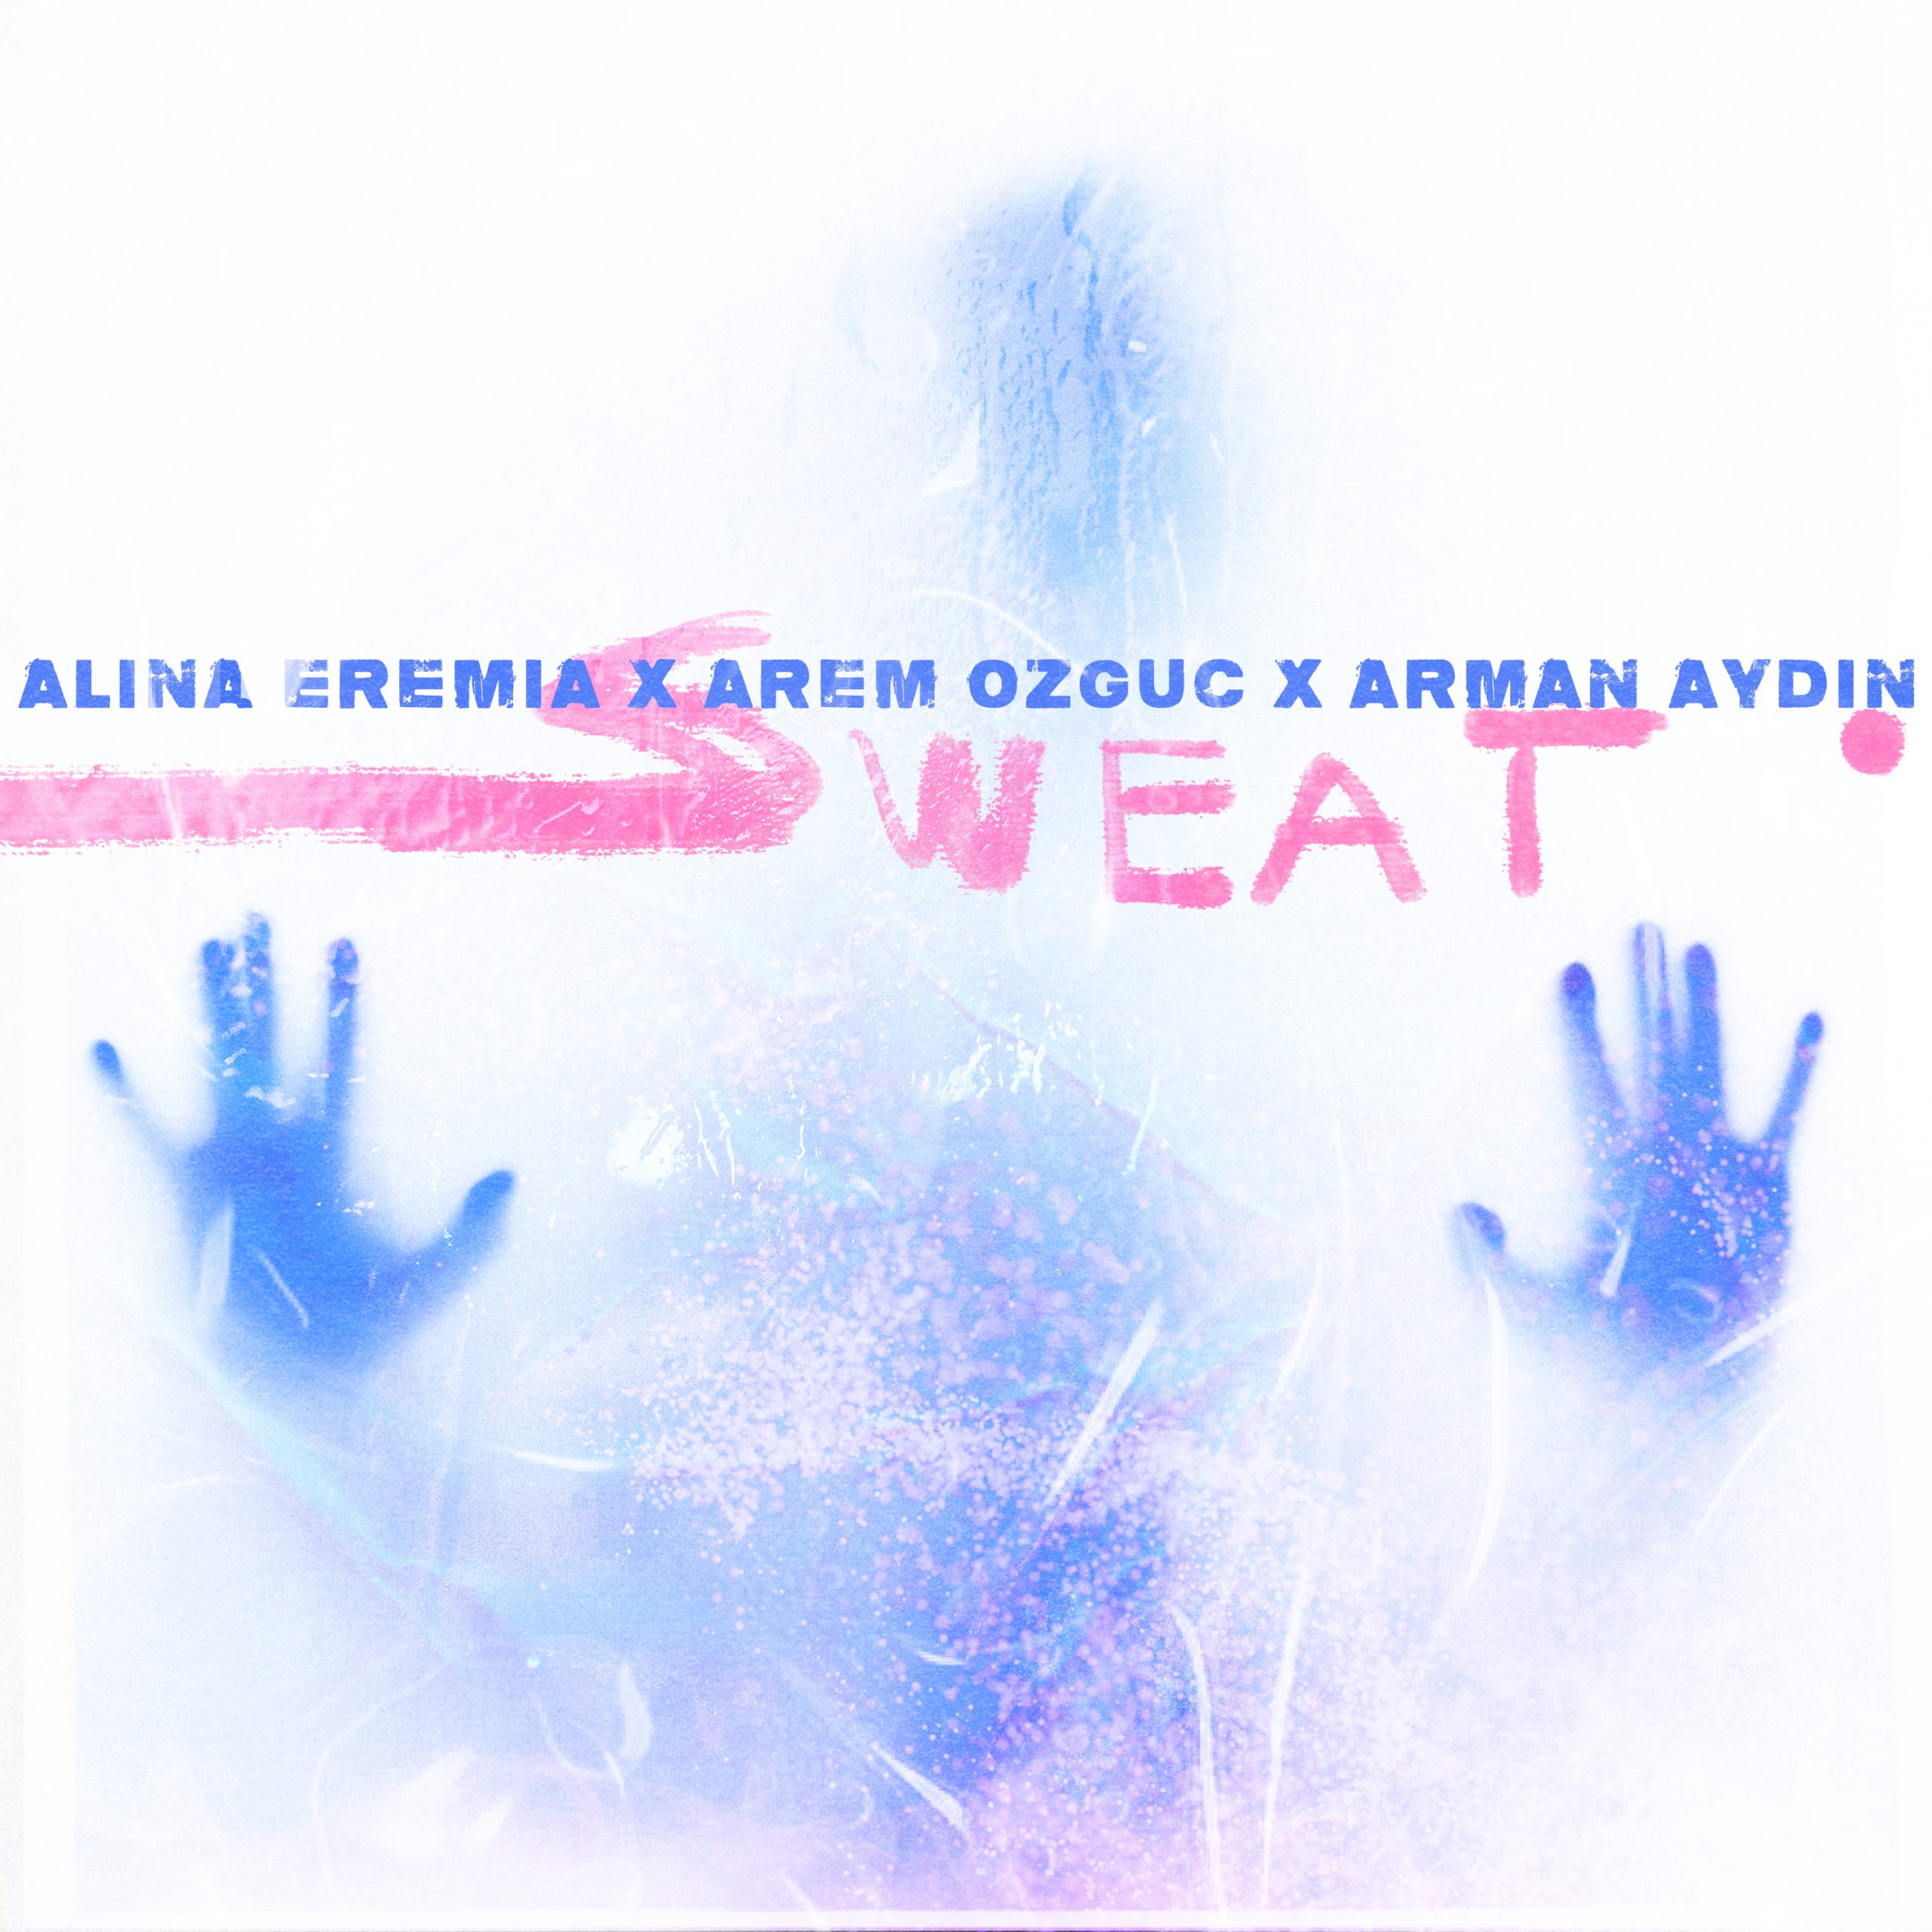 You are currently viewing SuperNova: Alina Eremia x Arem Ozguc x Arman Aydin – Sweat